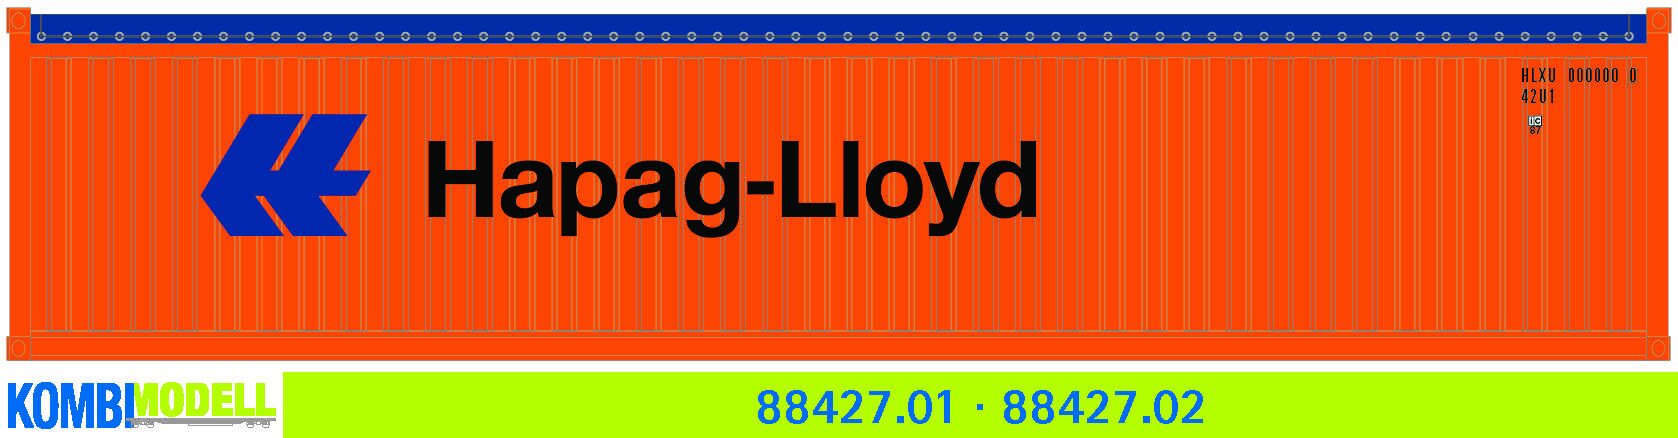 Kombimodell 88427.01 Ct 40' Open-Top (42U1) Hapag-Lloyd" #HLBU 560321" 